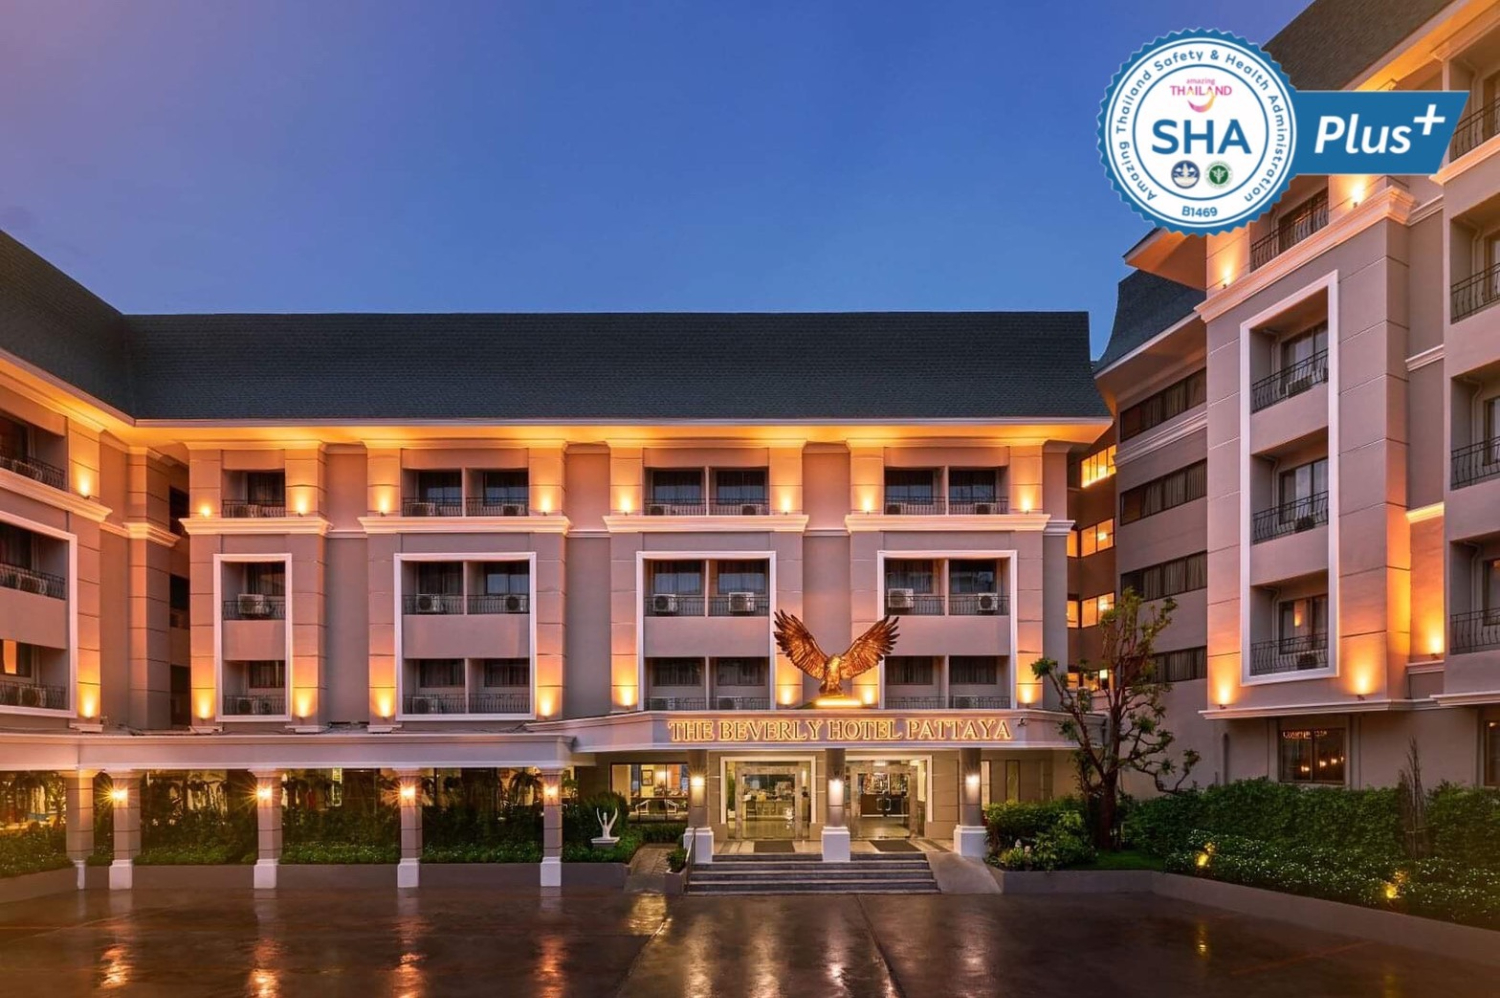 The Beverly Hotel Pattaya - Image 0